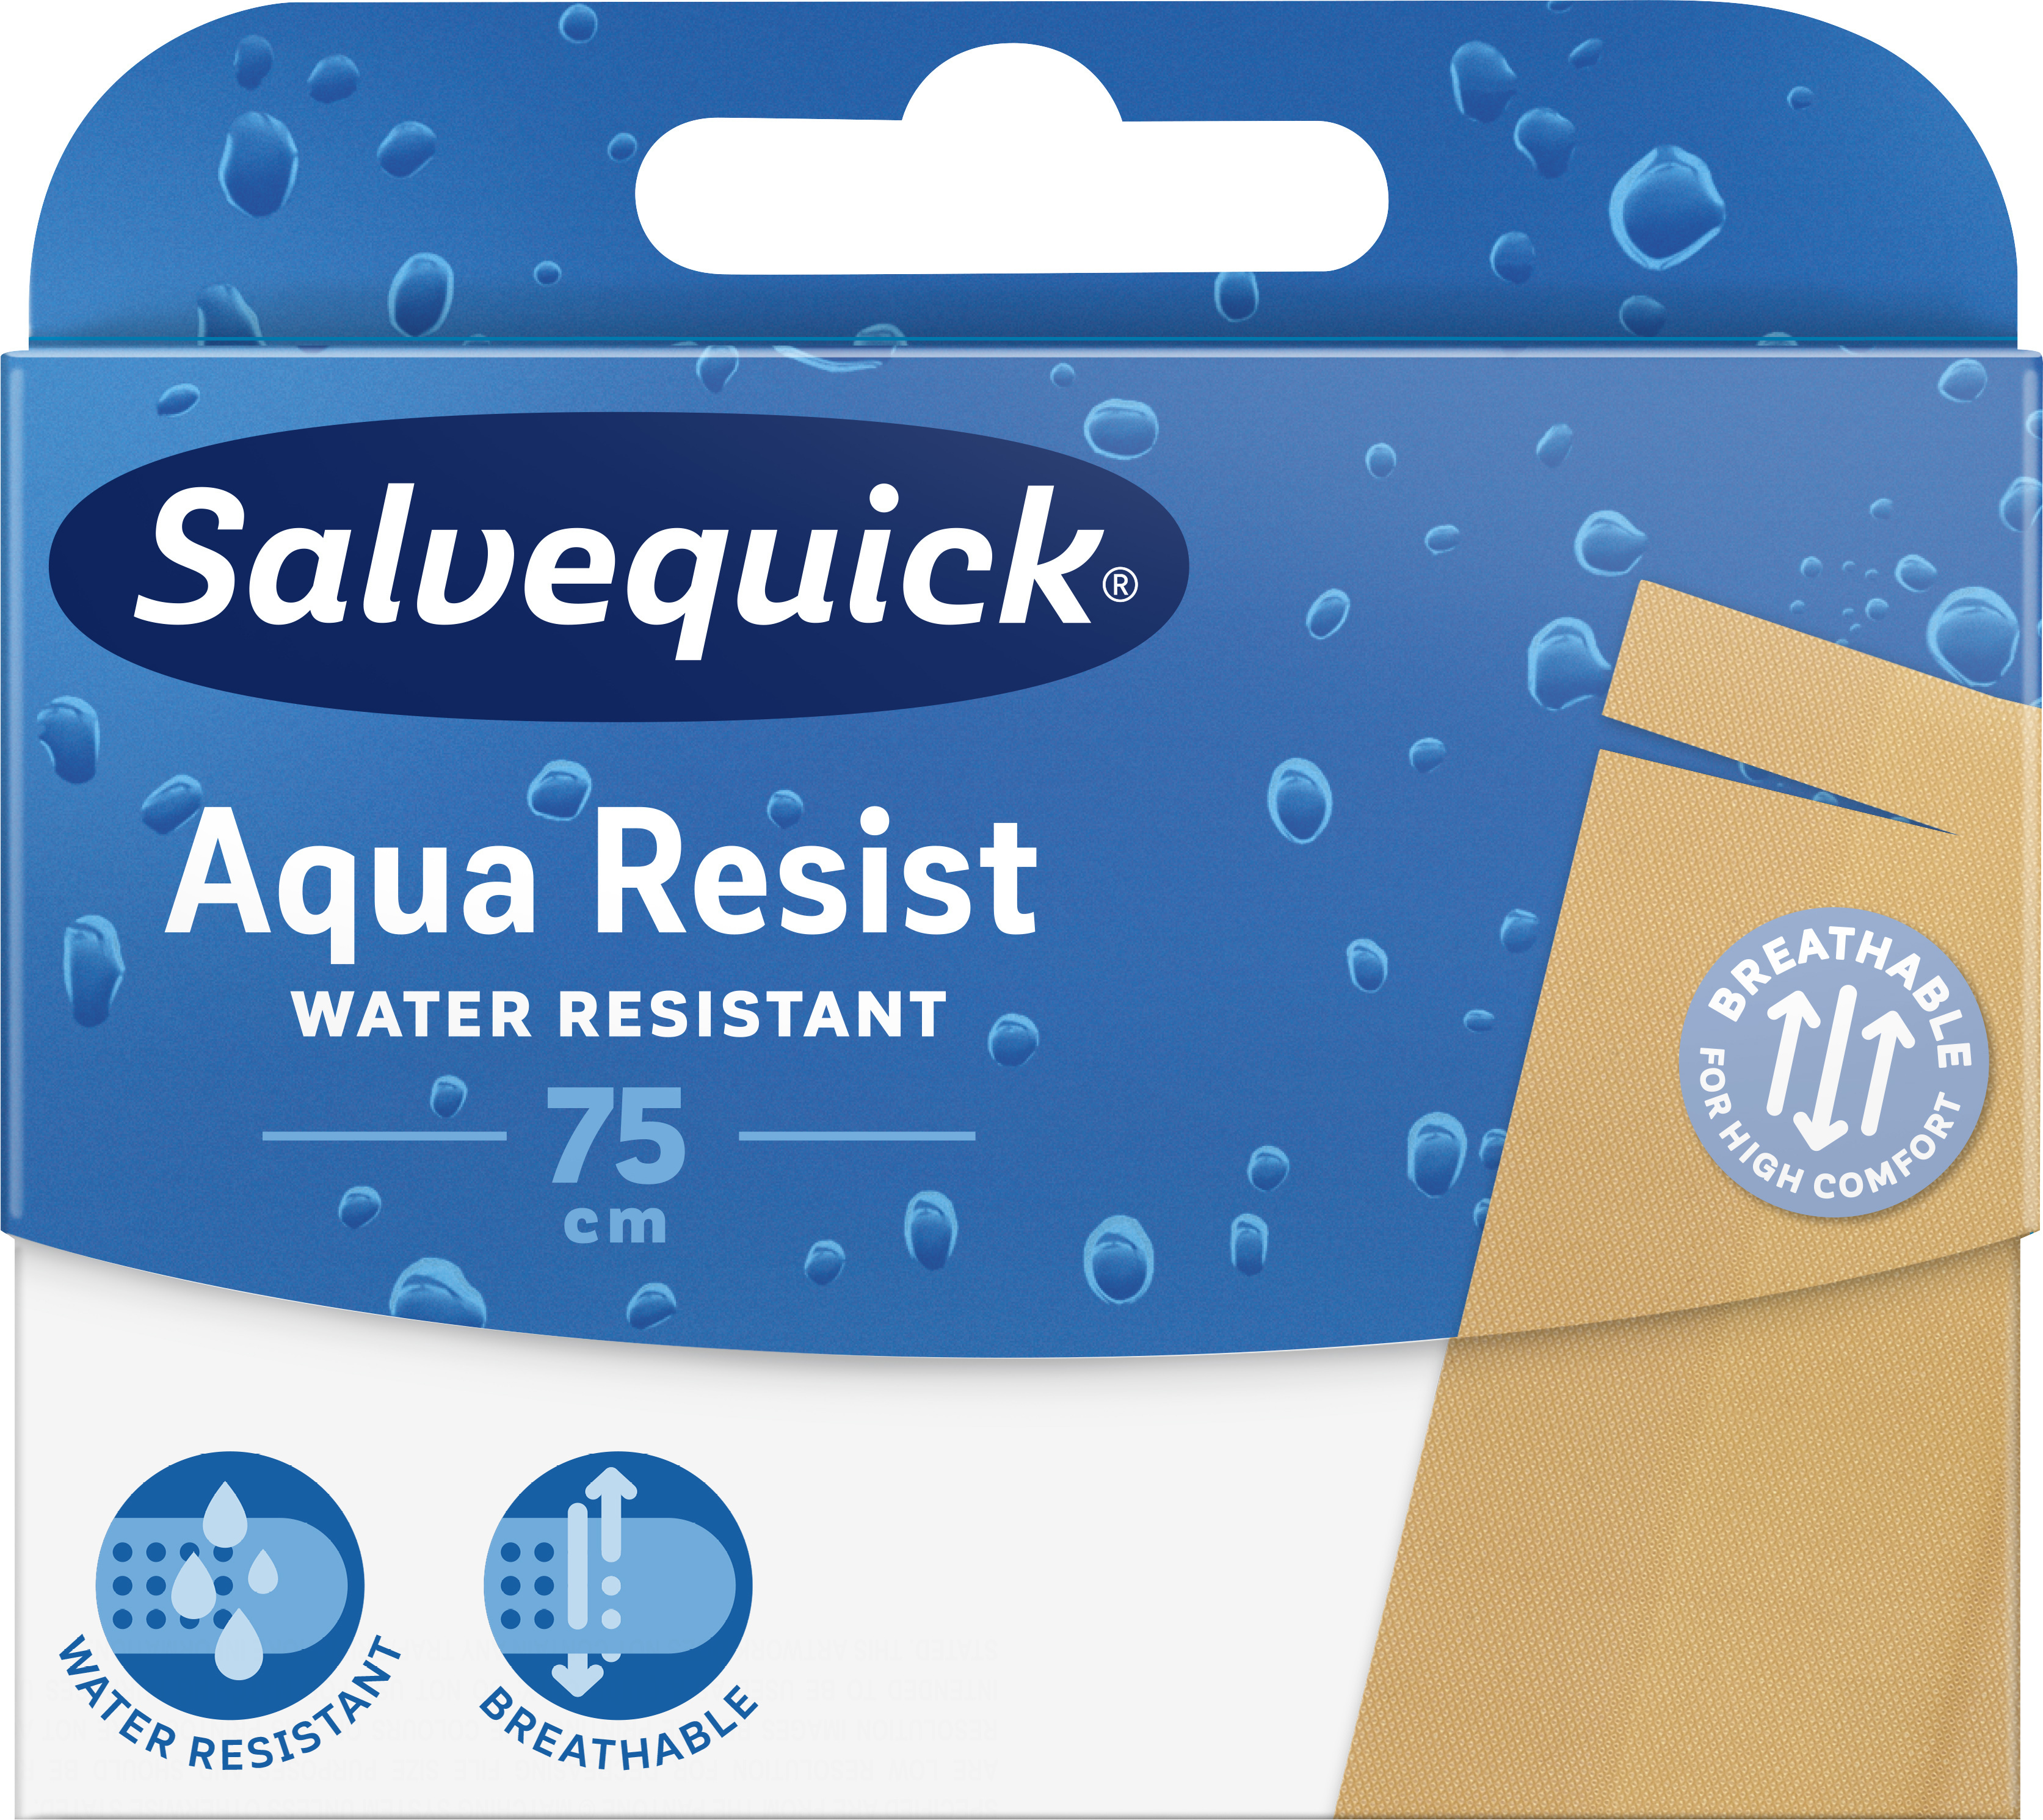 Salvequick Aqua Resist 75 cm